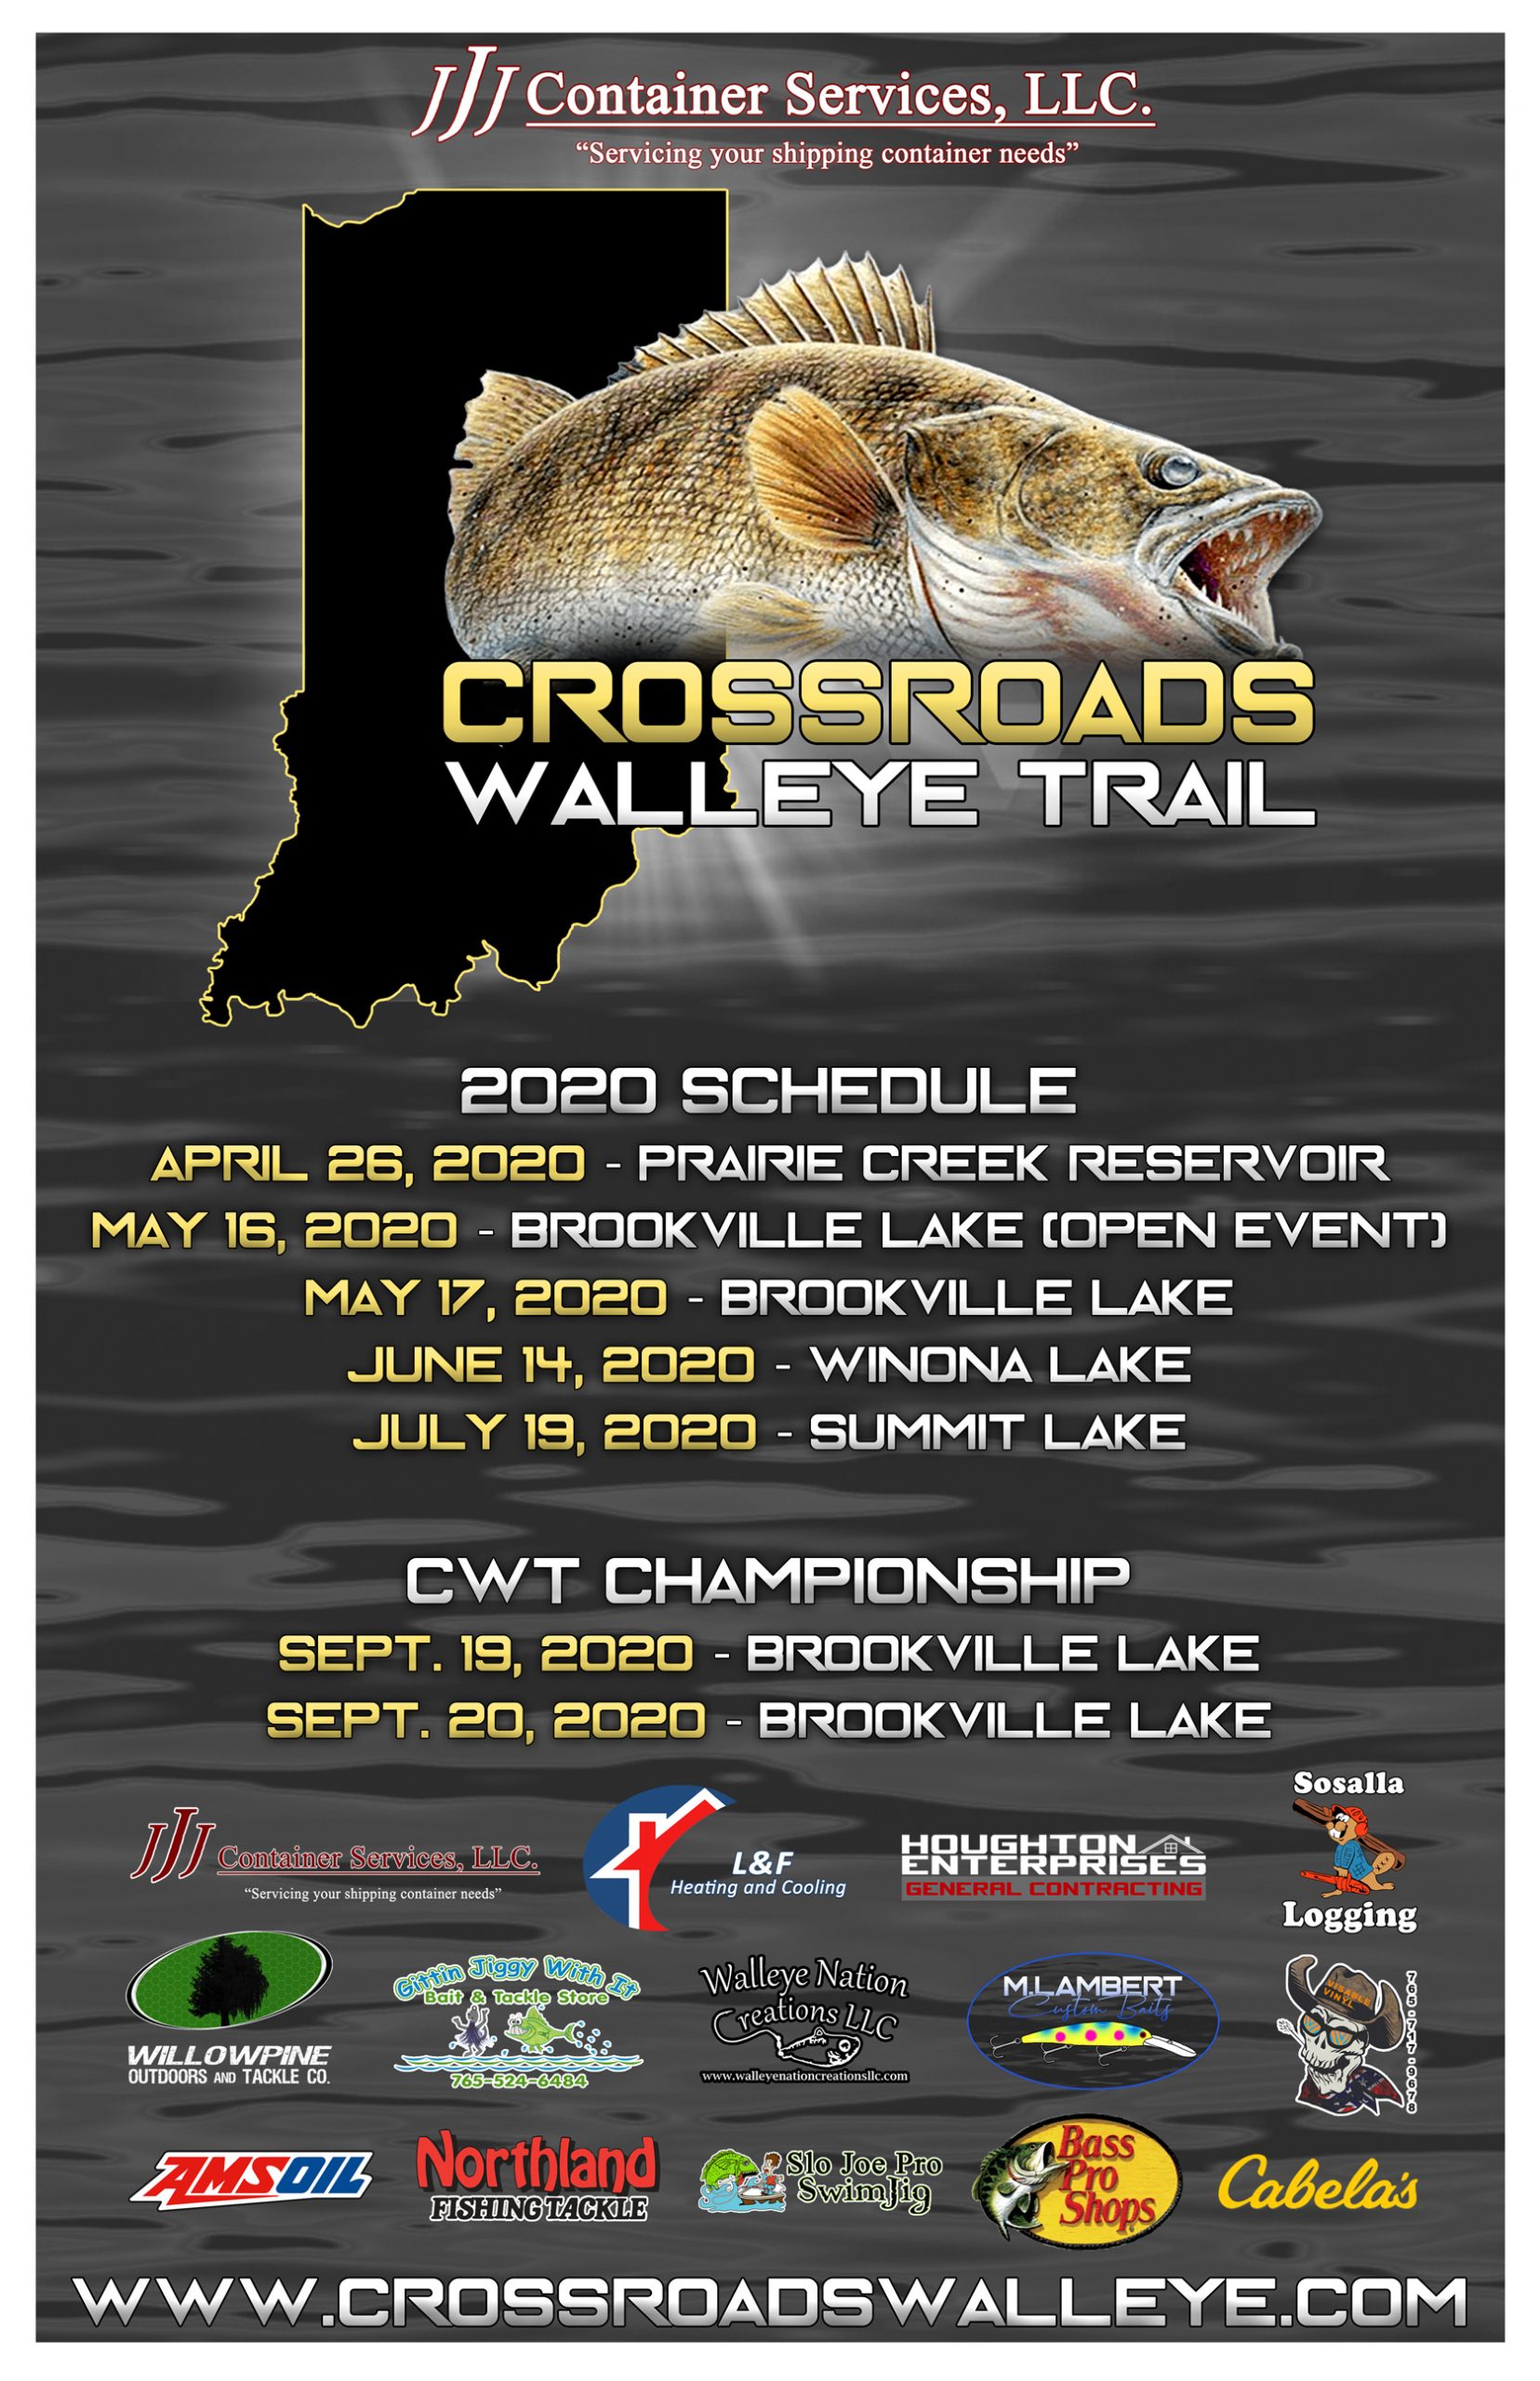 New Indiana Walleye Club and Tournament Trail, Crossroads Walleye Trail,  LLC, Announces 2020 Tournament Schedule